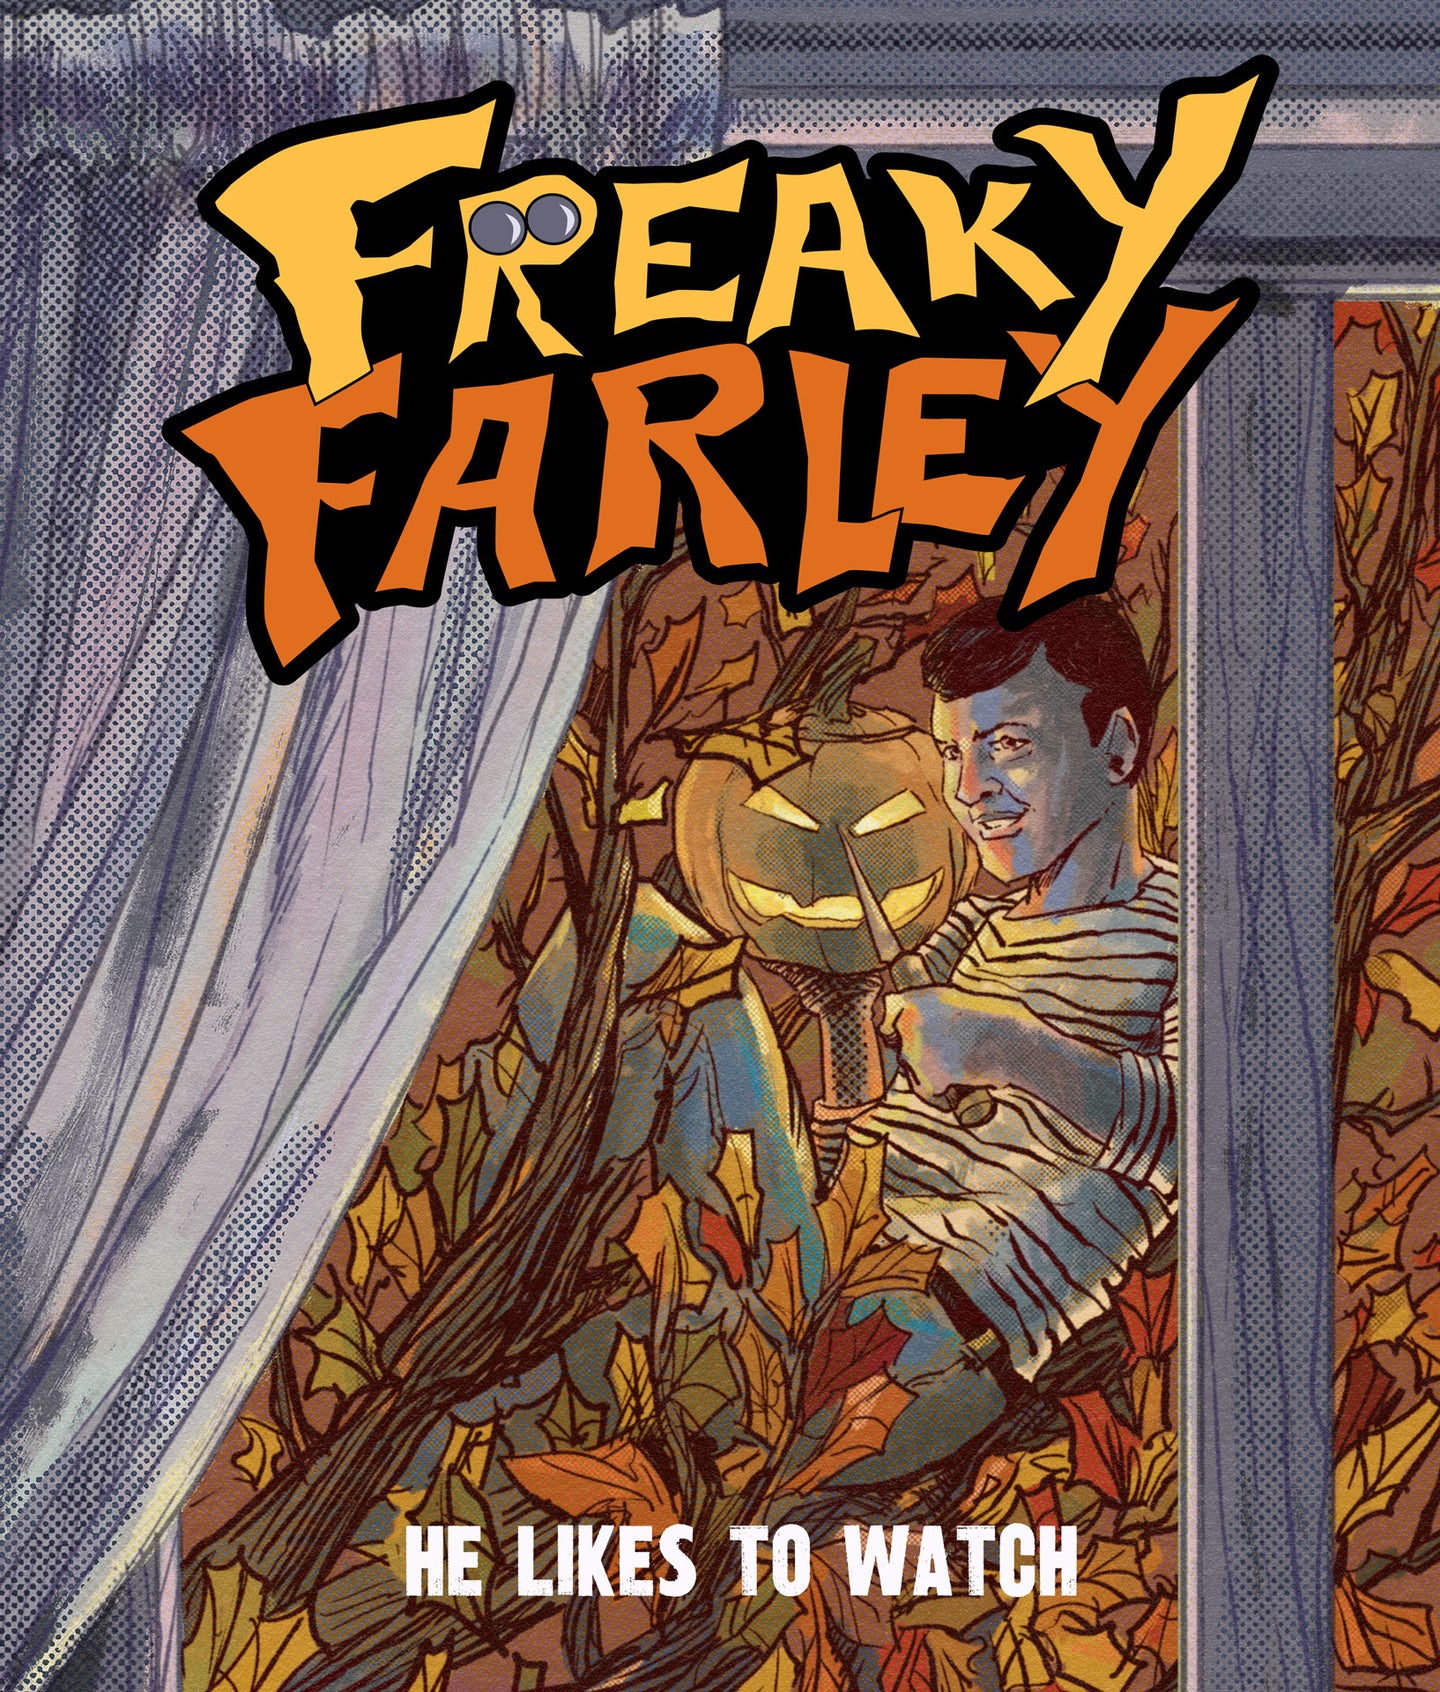 Blu-Ray: Freaky Farley